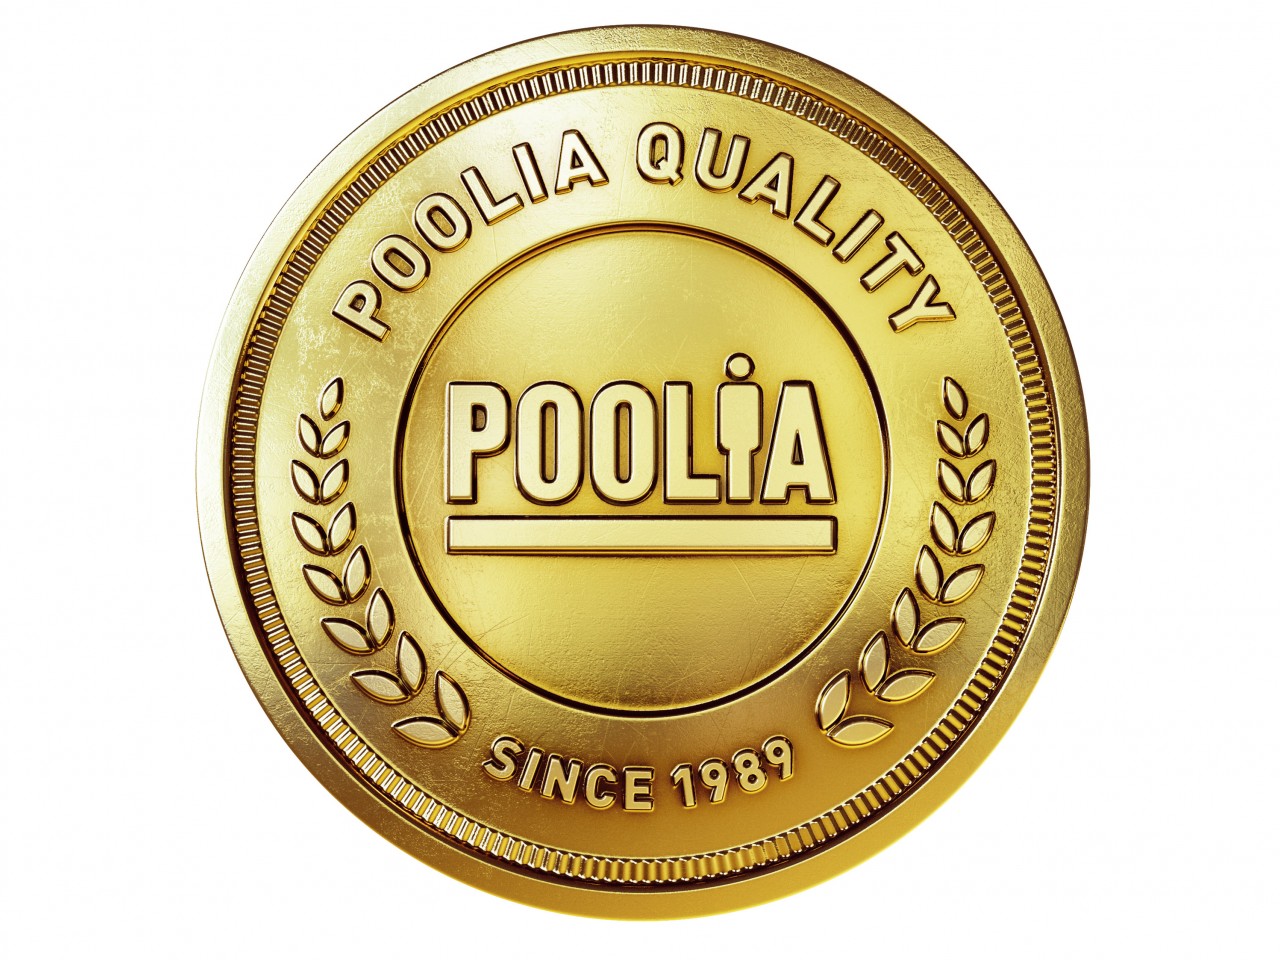 Gold medal for Poolia guld medalj pris metal peng mynt krans